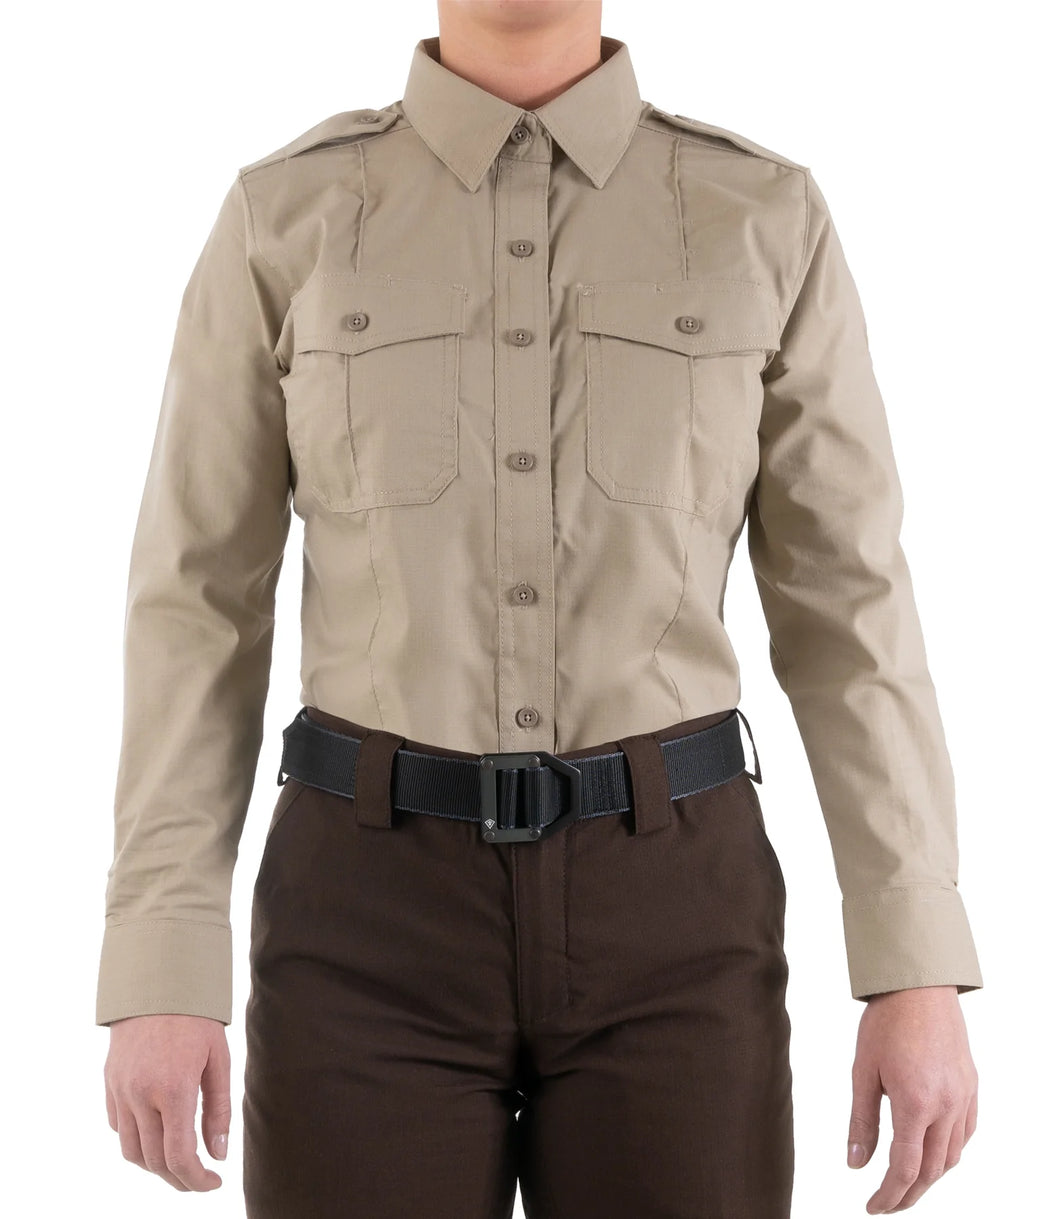 (121011) Women's Pro Duty Uniform Long Sleeve Shirt